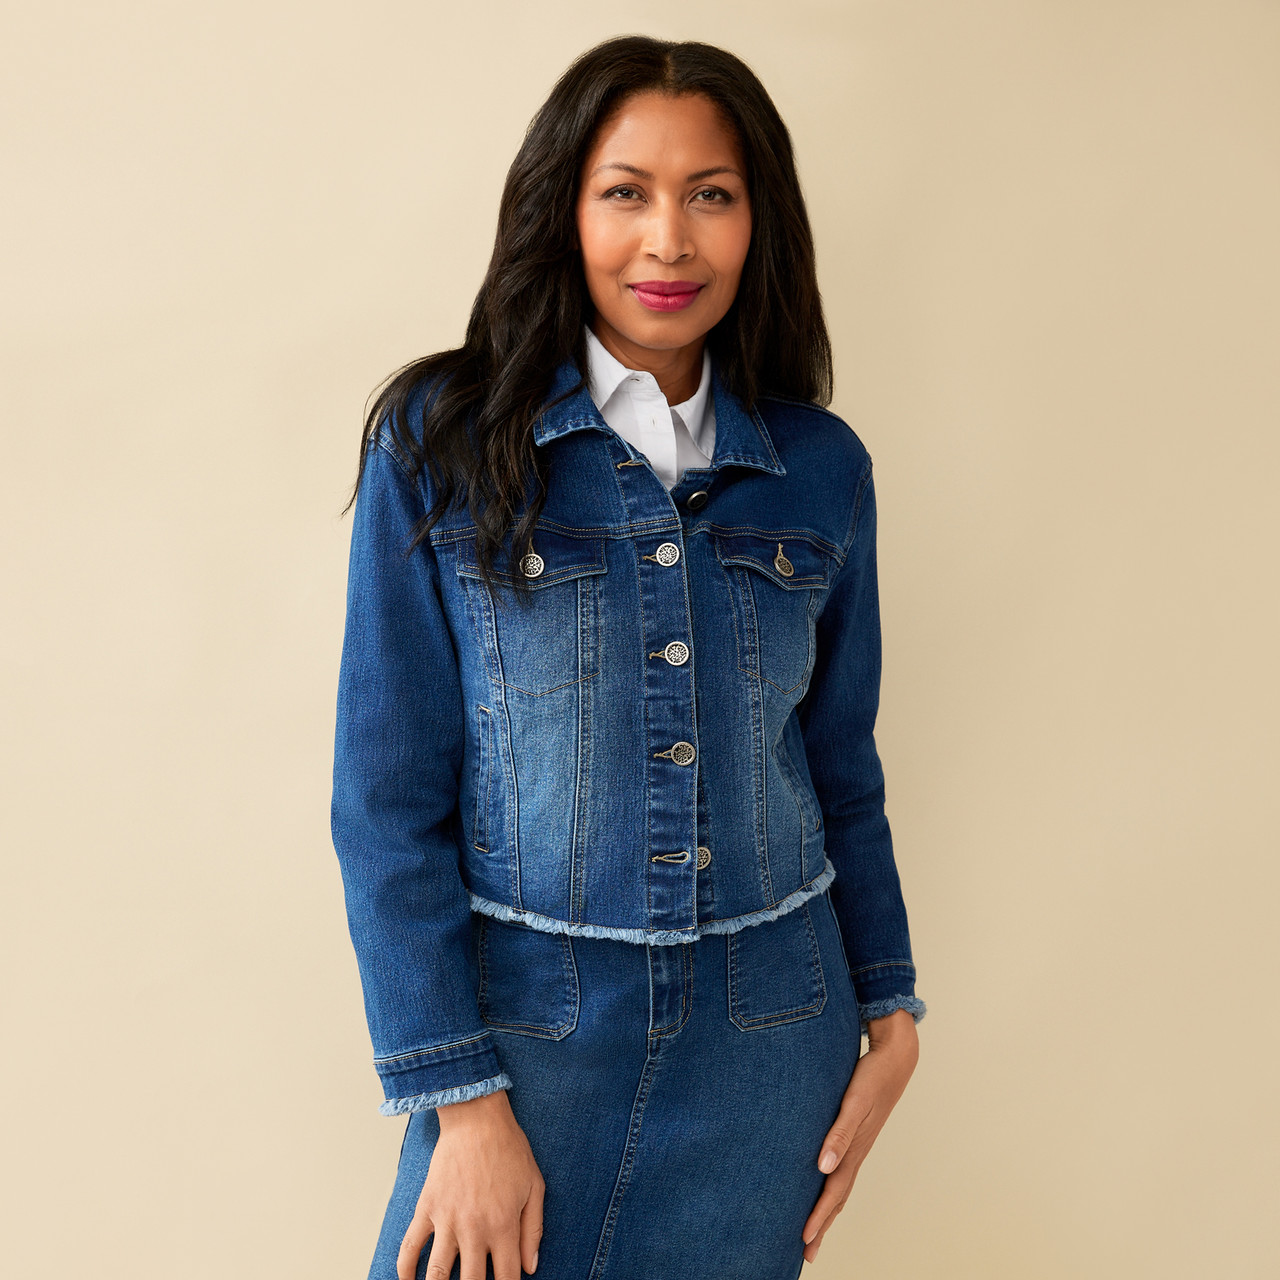 Women's Jackets: Nylon, Denim Jackets & More